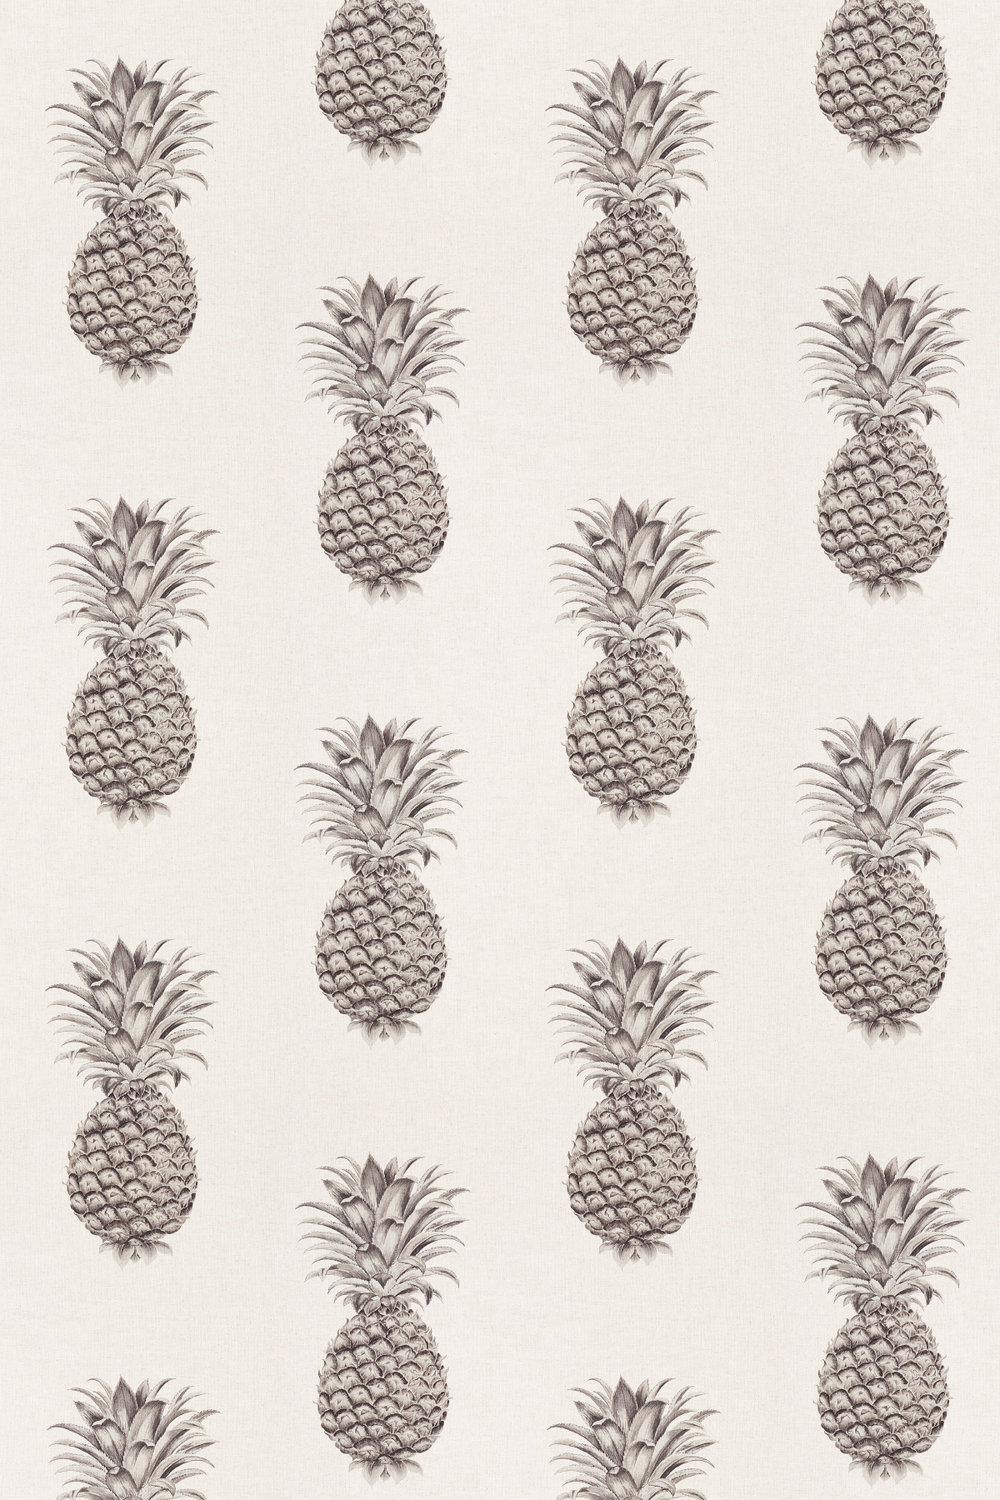 Pineapple Royale Fabric - Graphite / Linen - by Sanderson